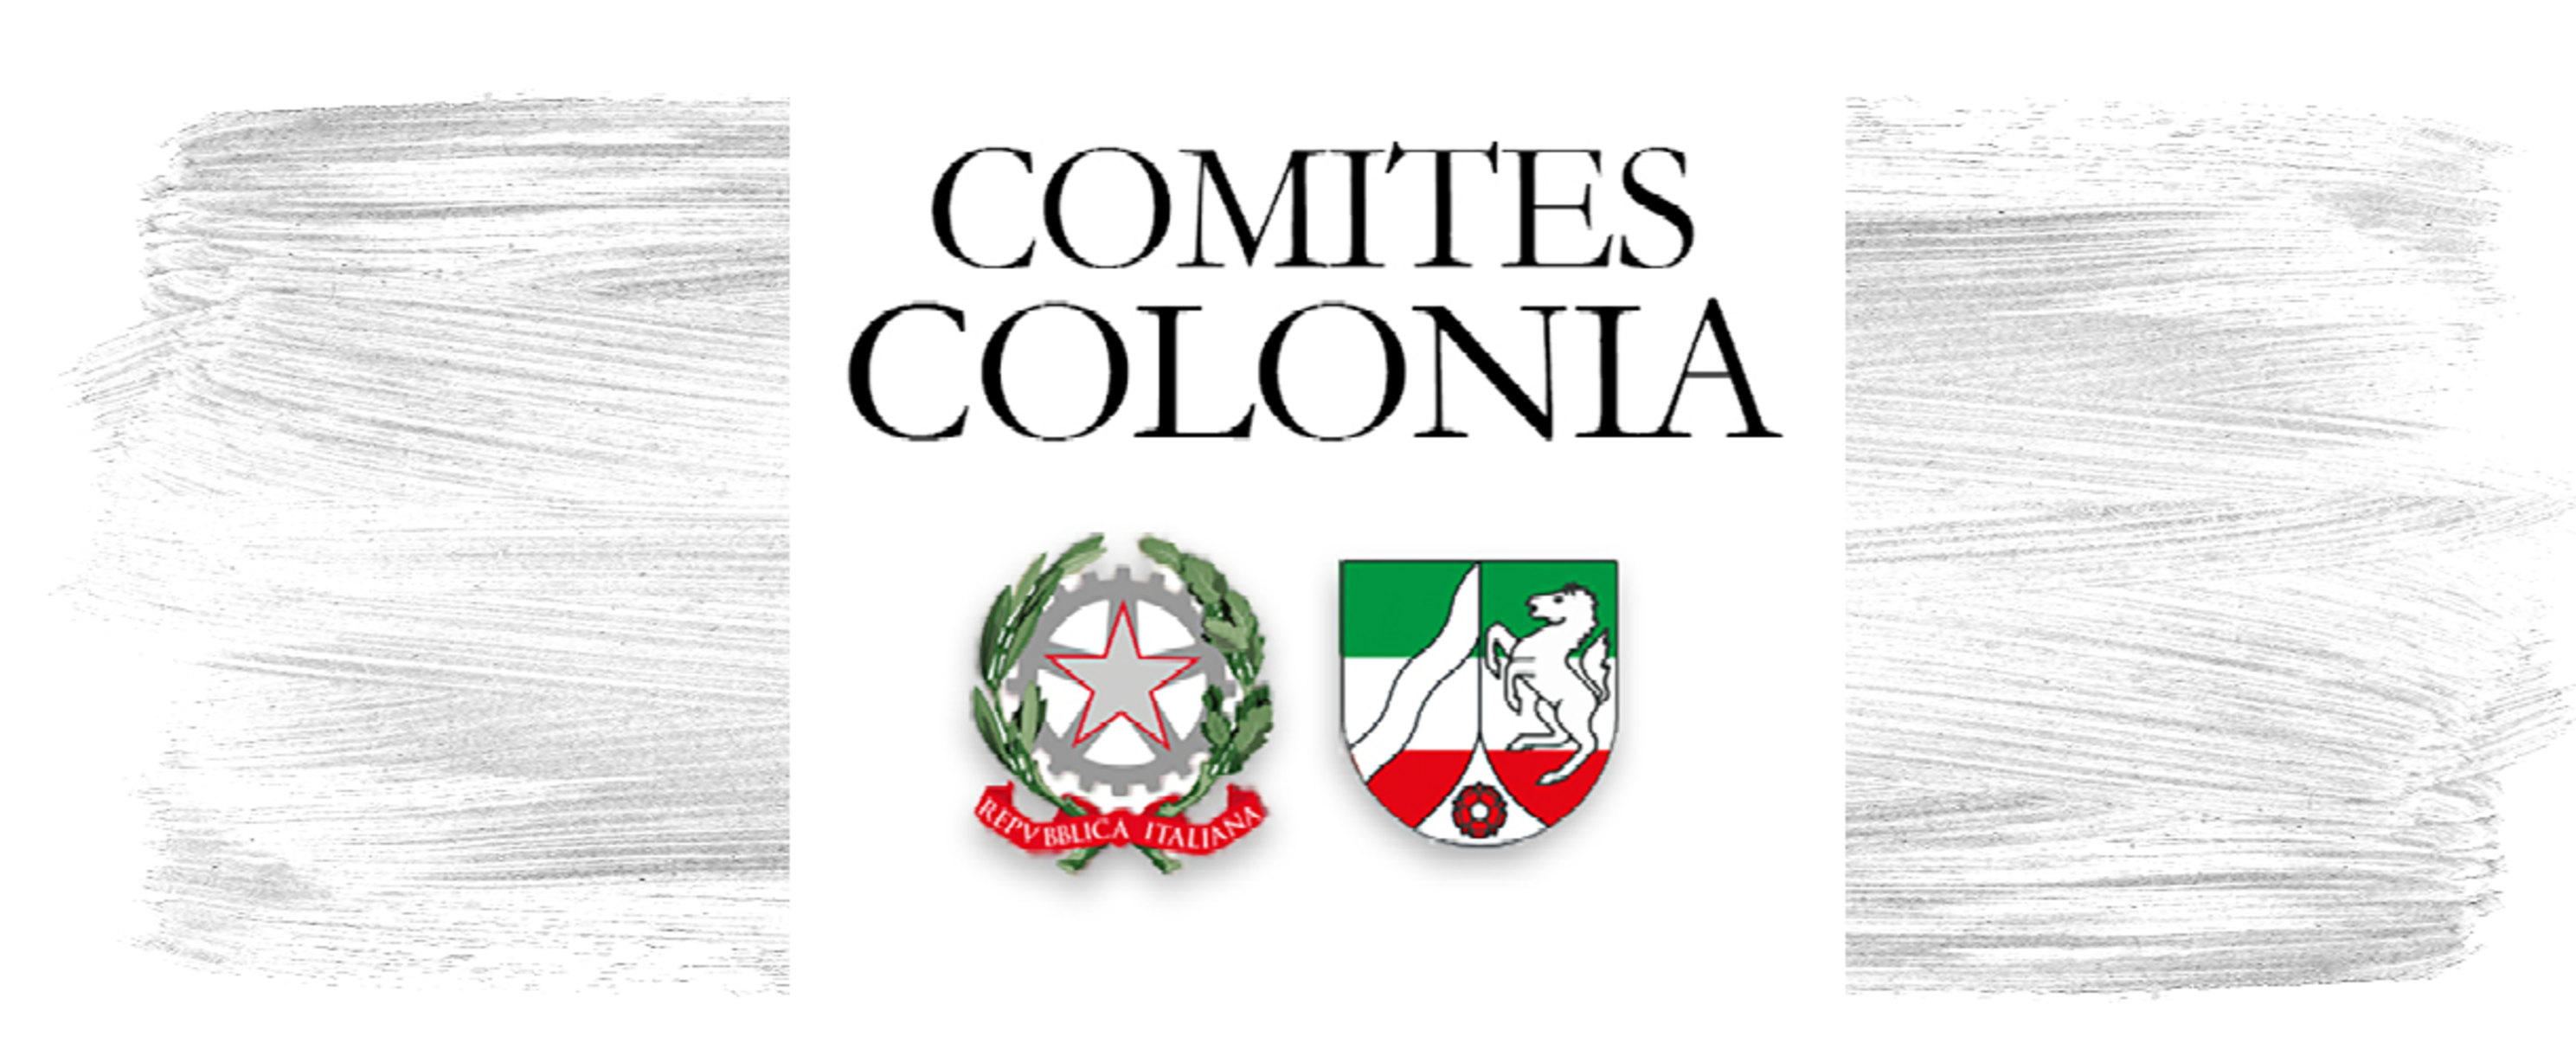 Comites Colonia - Italienischer Kulturverein